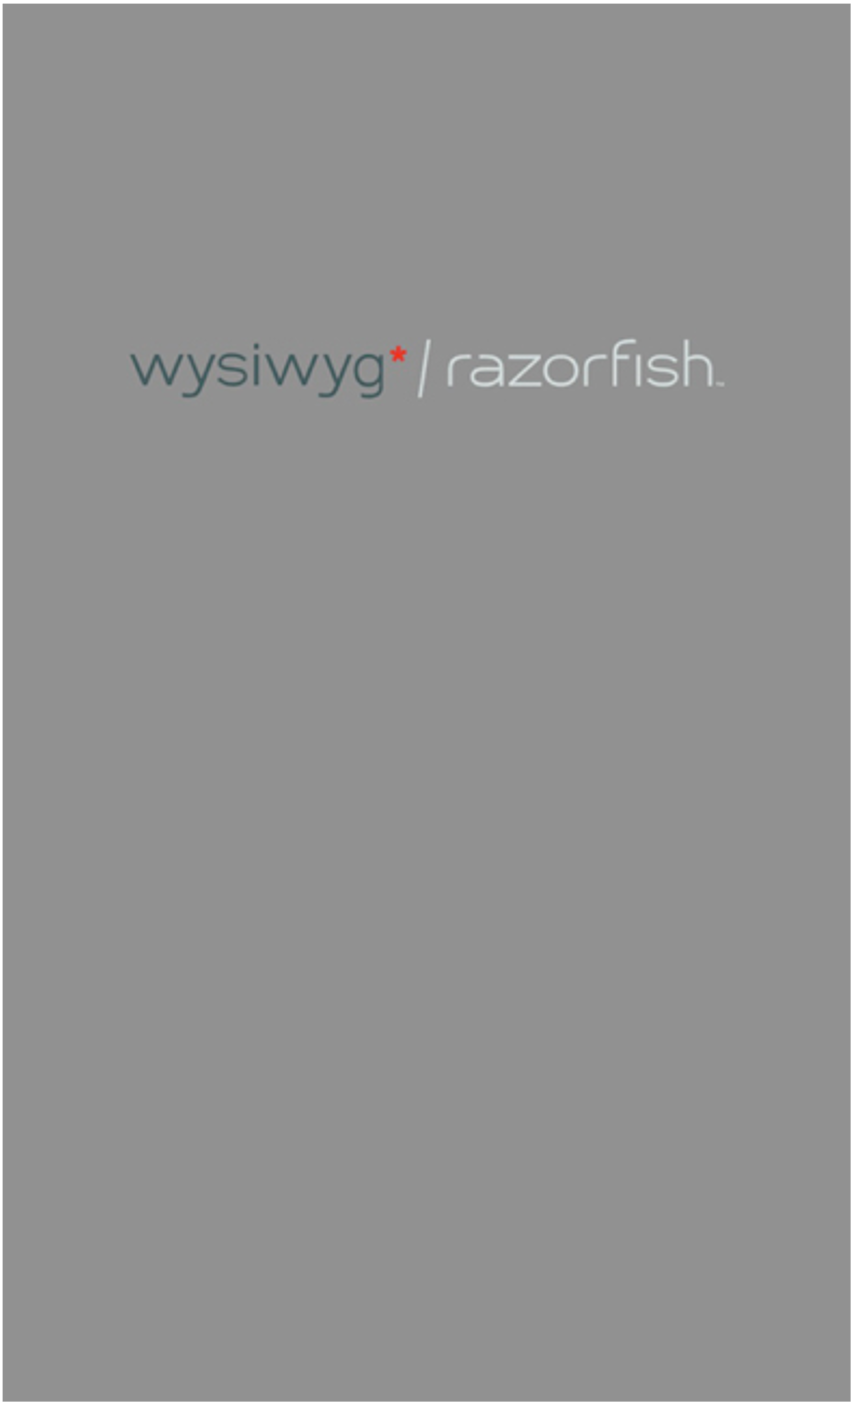 Wysiwyg / Razorfish – 11 years on a page